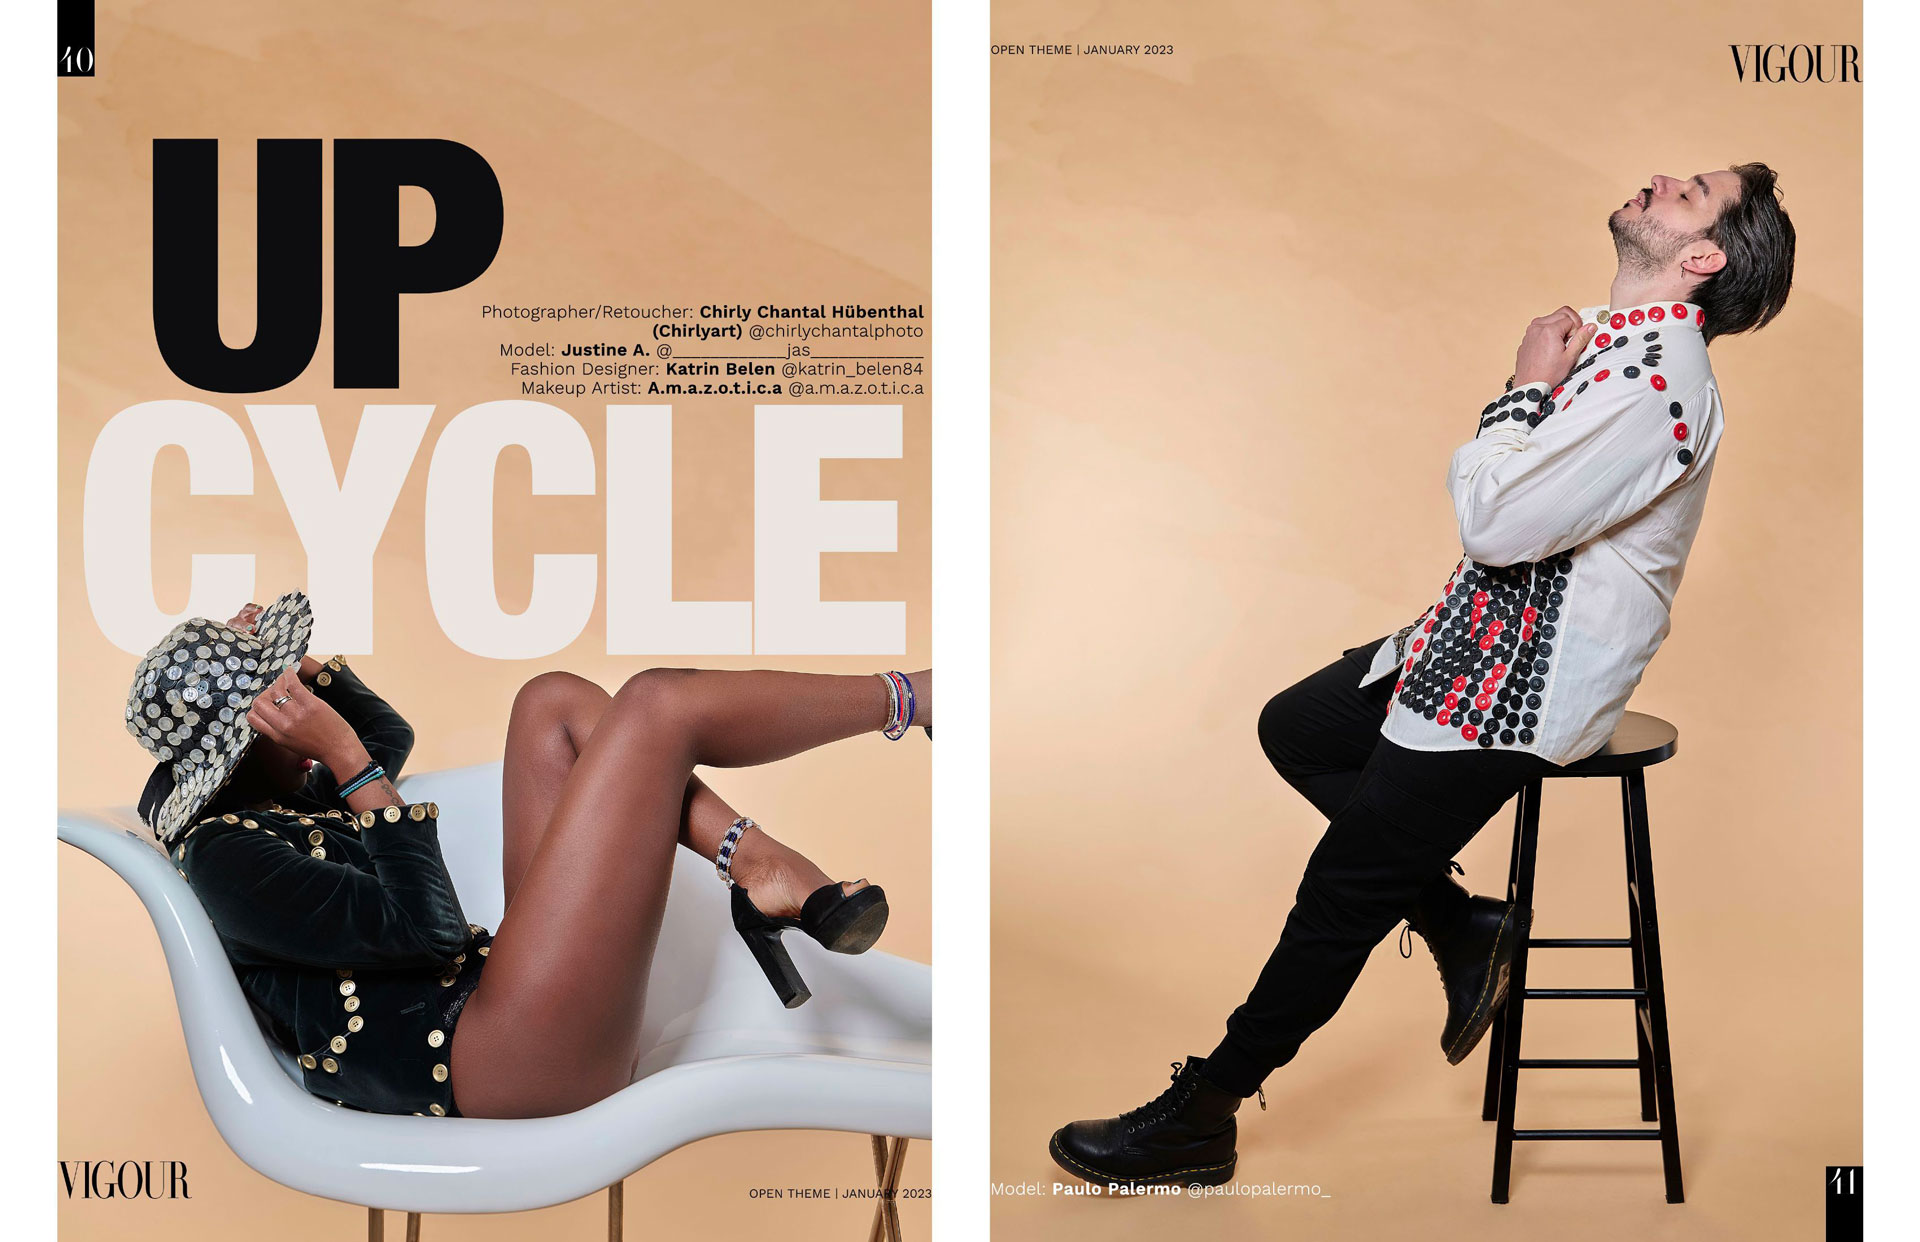 Vigour Magazine Up Cycle